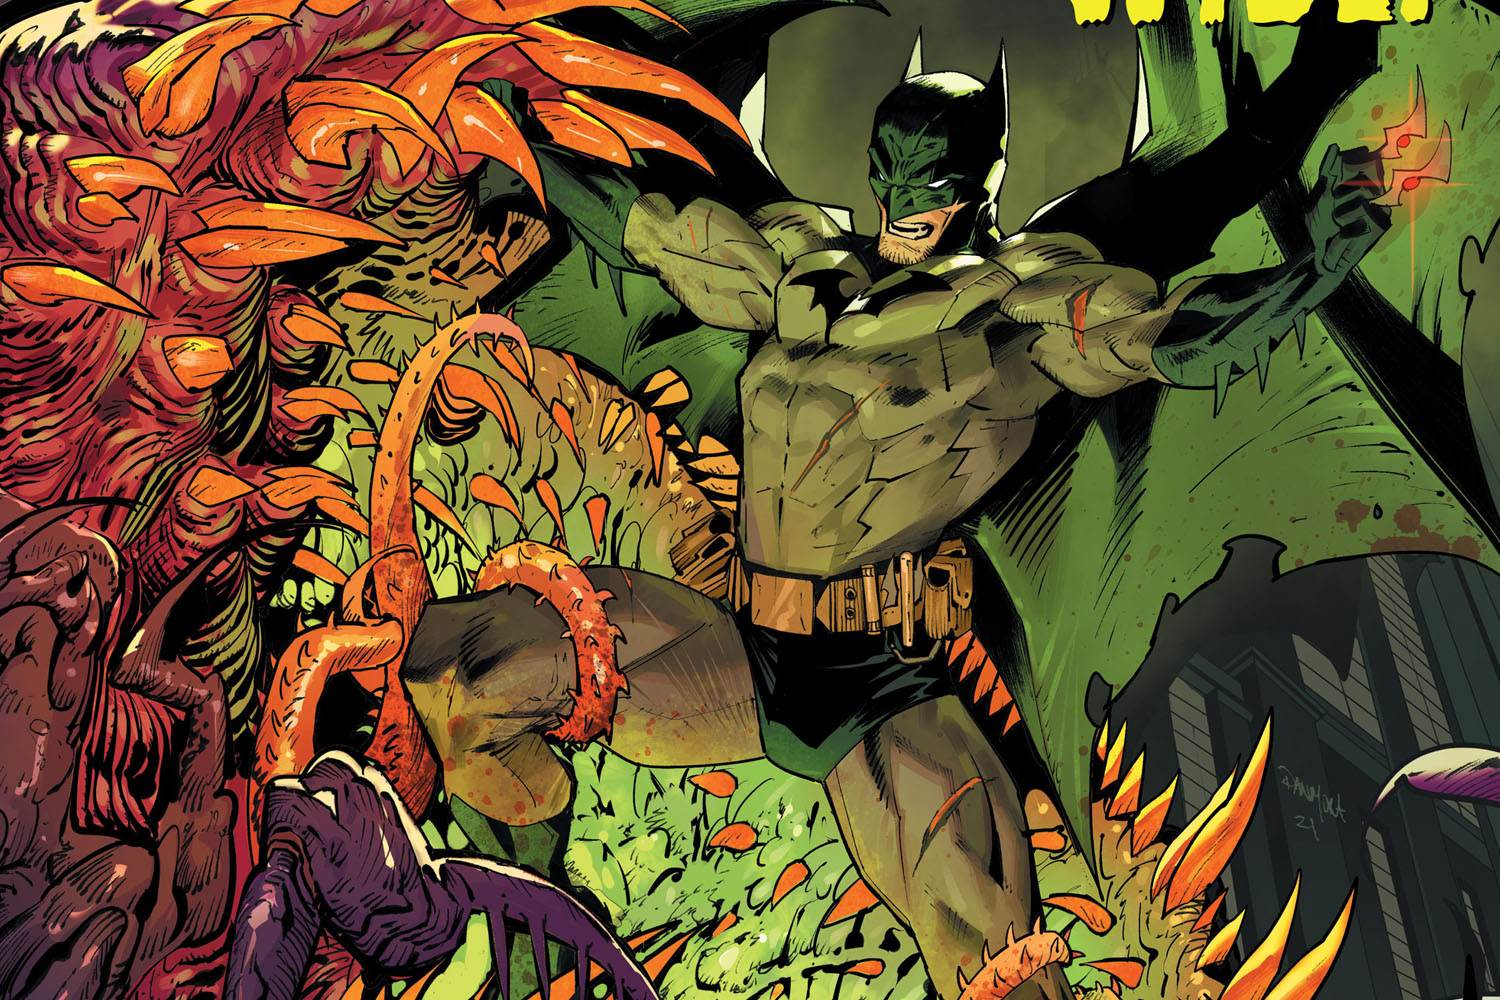 'Detective Comics' #1045 shows a different side of Batman